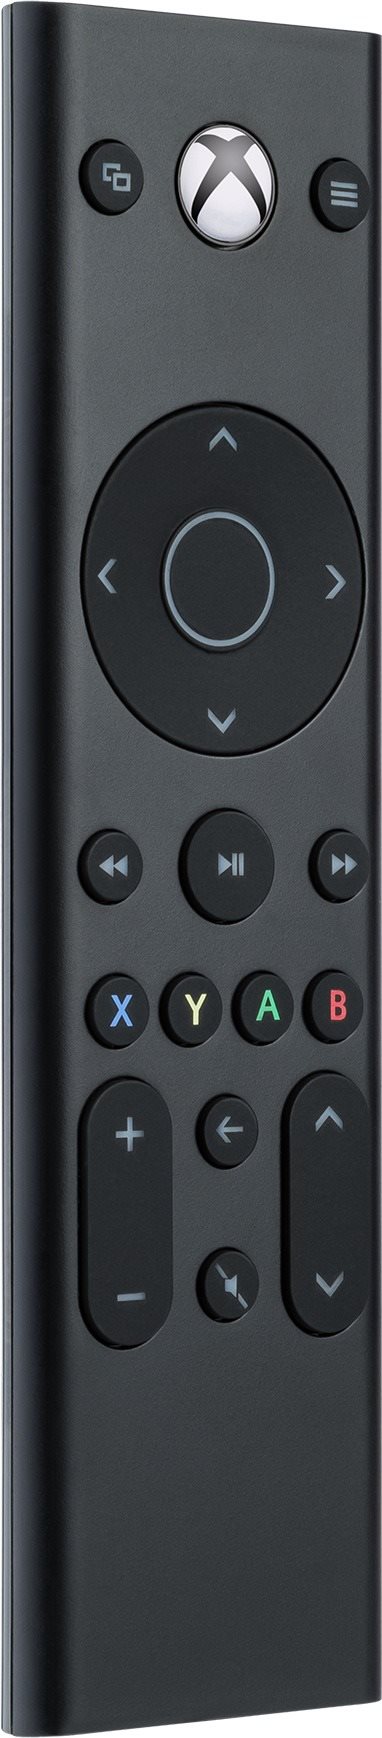 PDP Talon Media Remote - Xbox One